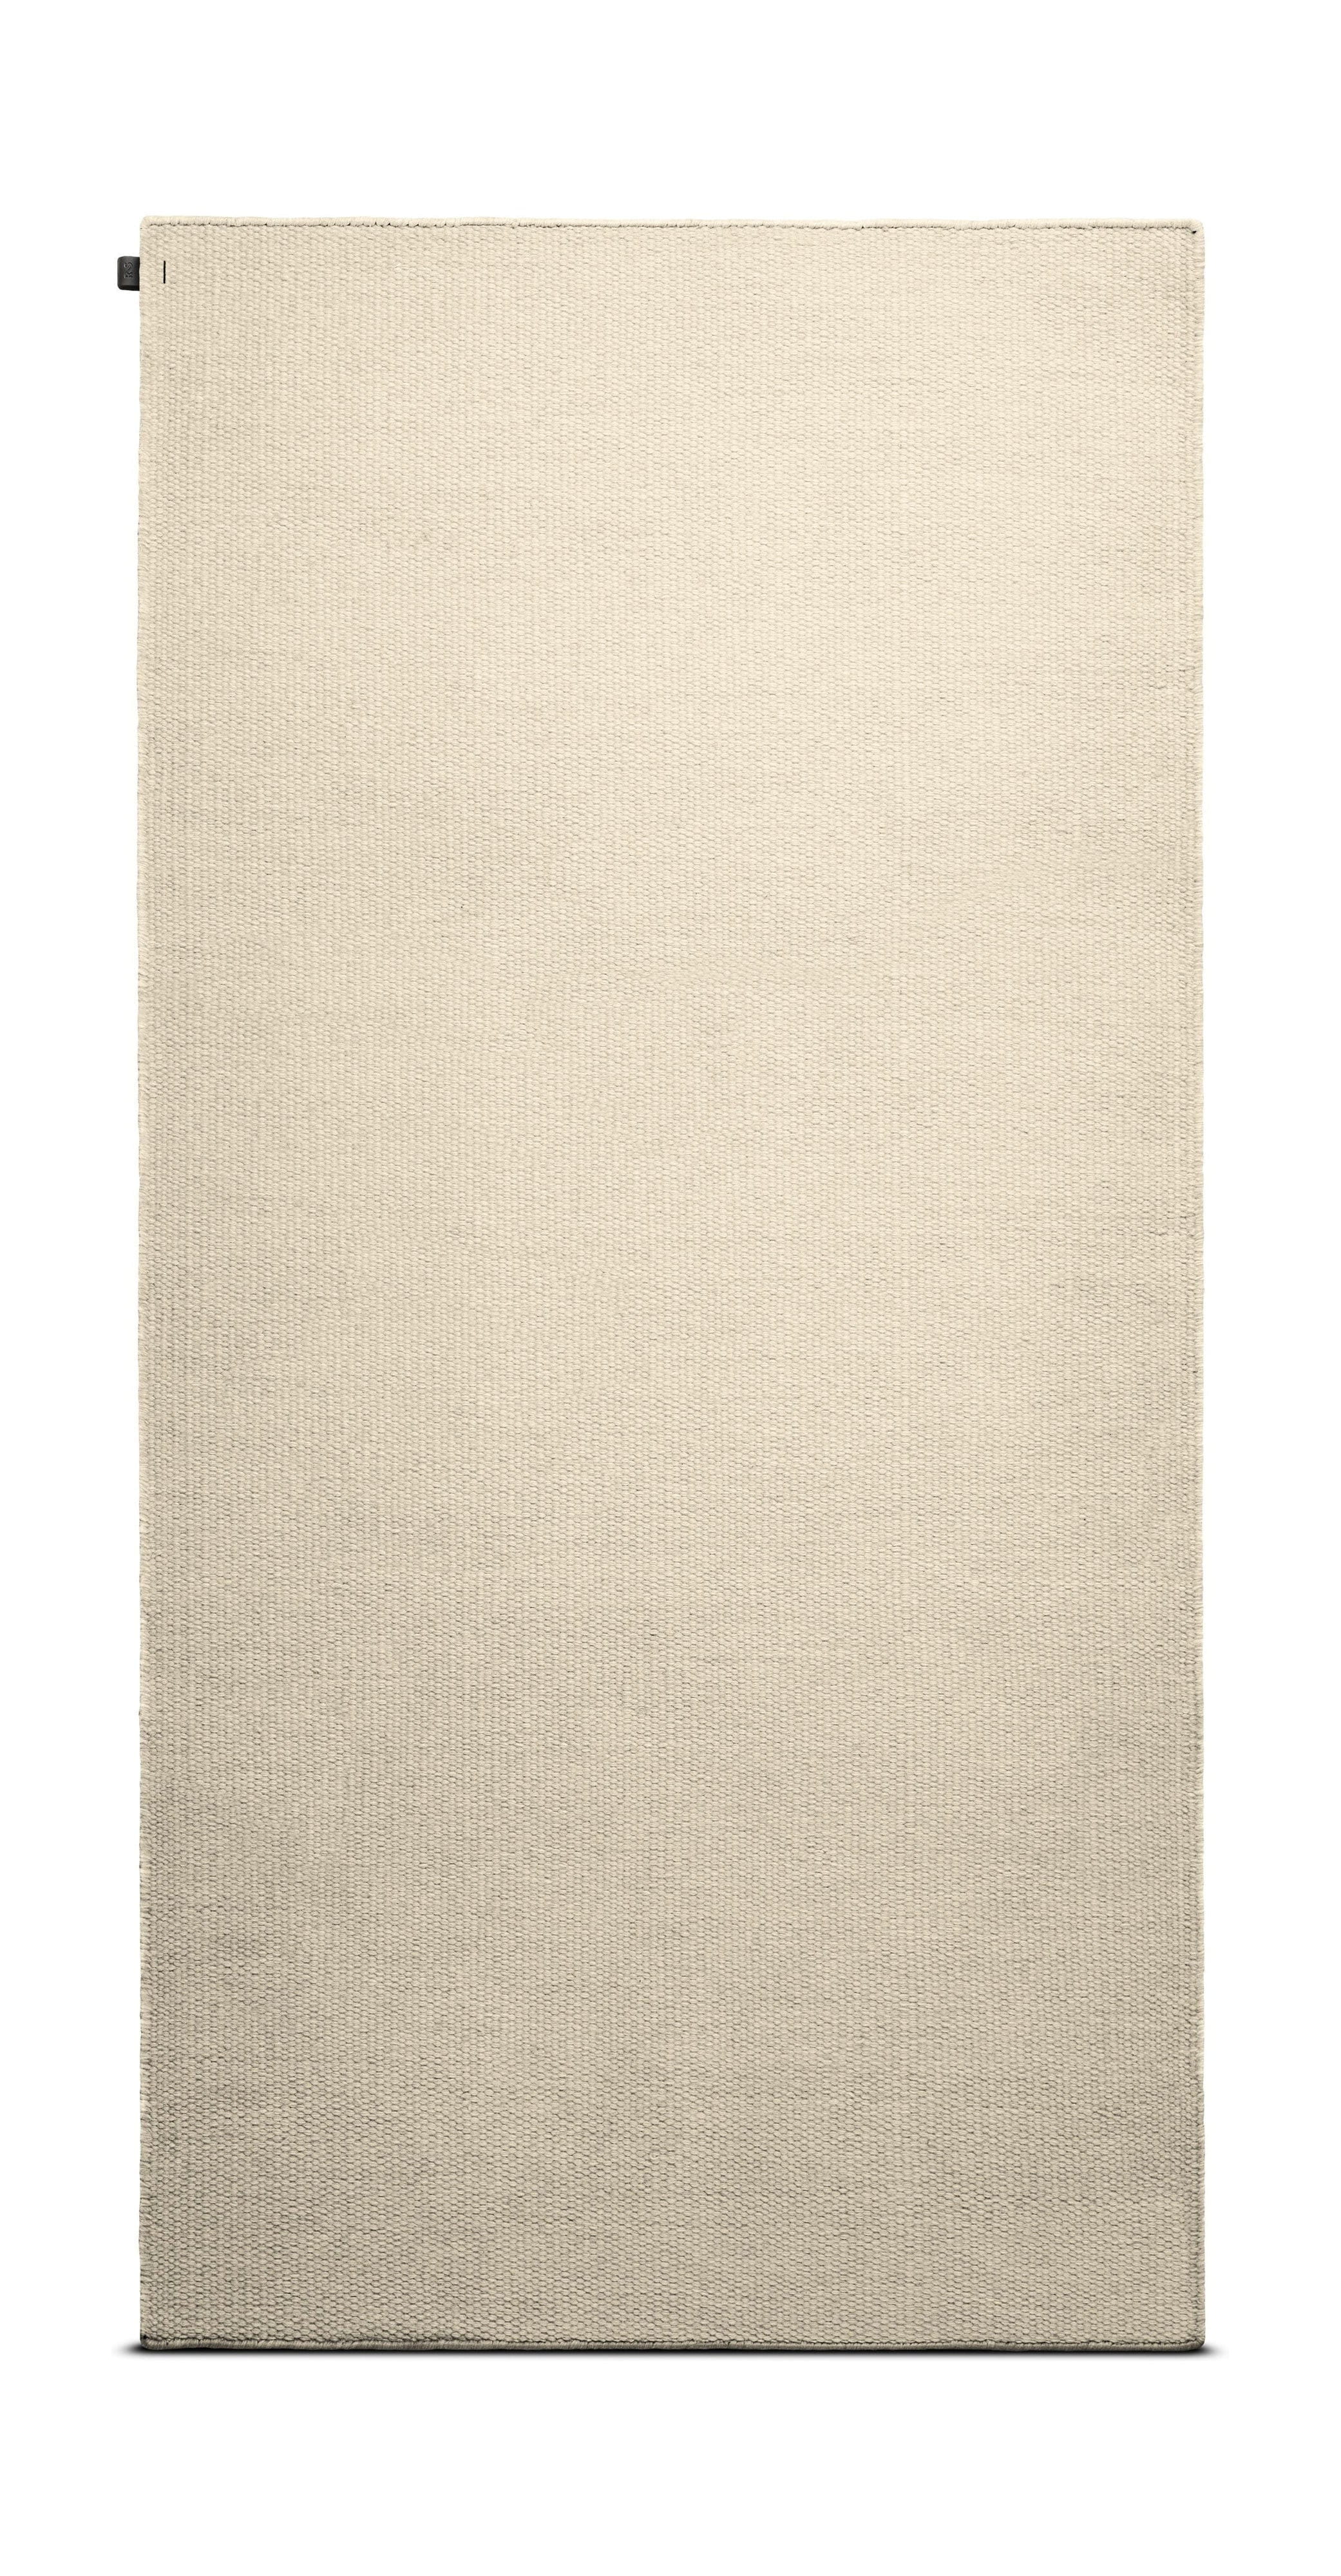 Rug Solid Huisdier tapijt 75 x 200 cm, latte